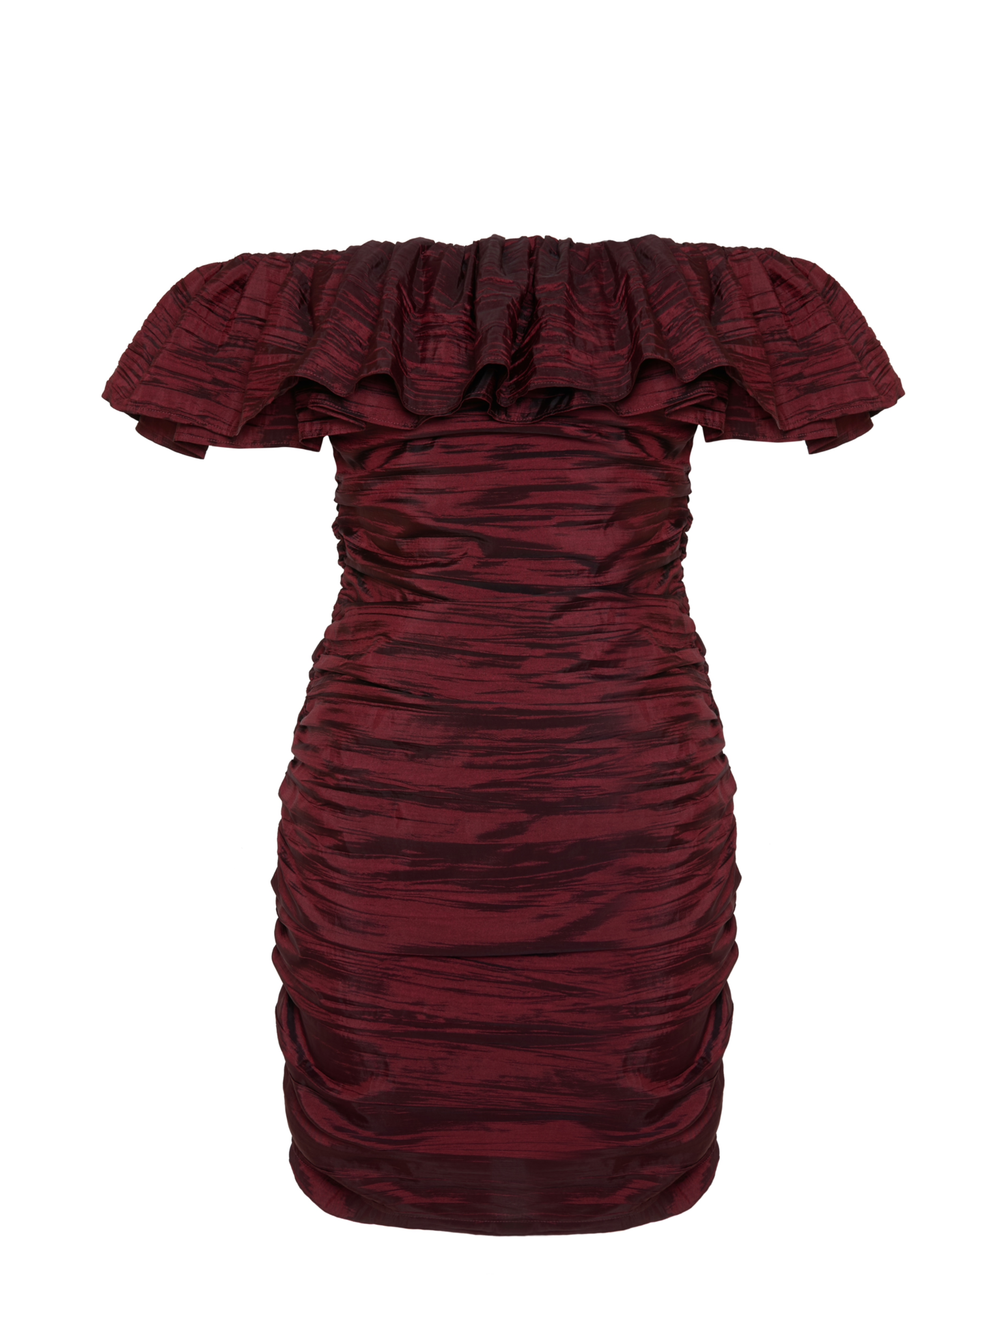 Burgundy dress